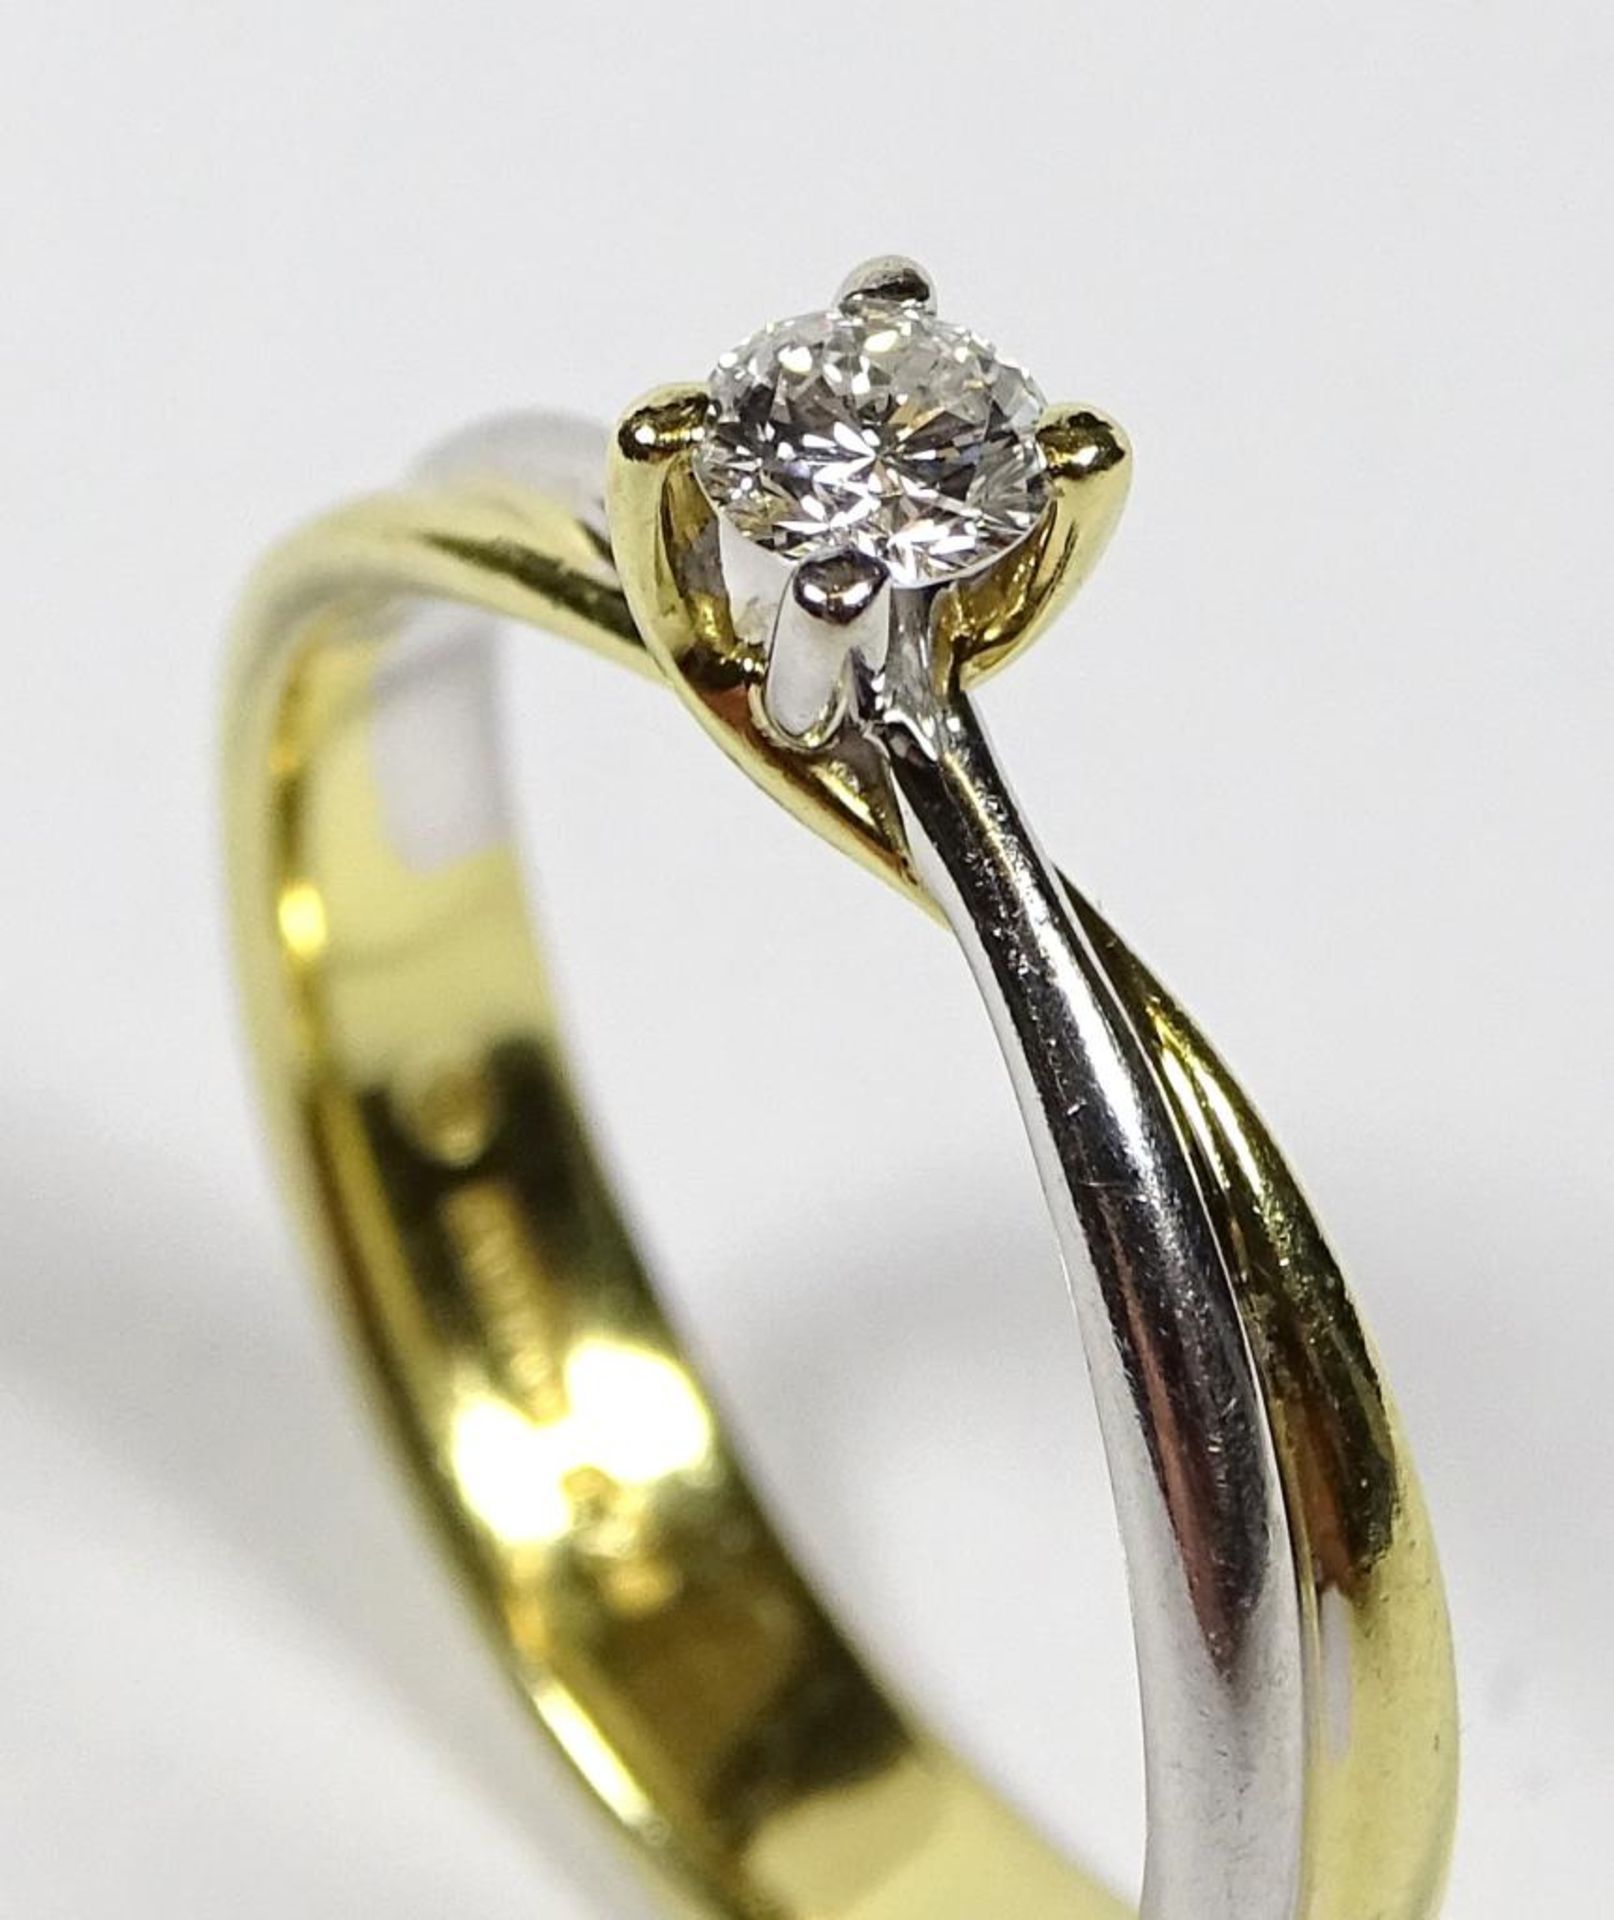 Solitär-Brillant-Ring,Bicolor,Gold 750er, Brillant 0,20ct.,"Damiani", 3181 AL, 4,31gr., RG 55/5 - Bild 9 aus 10